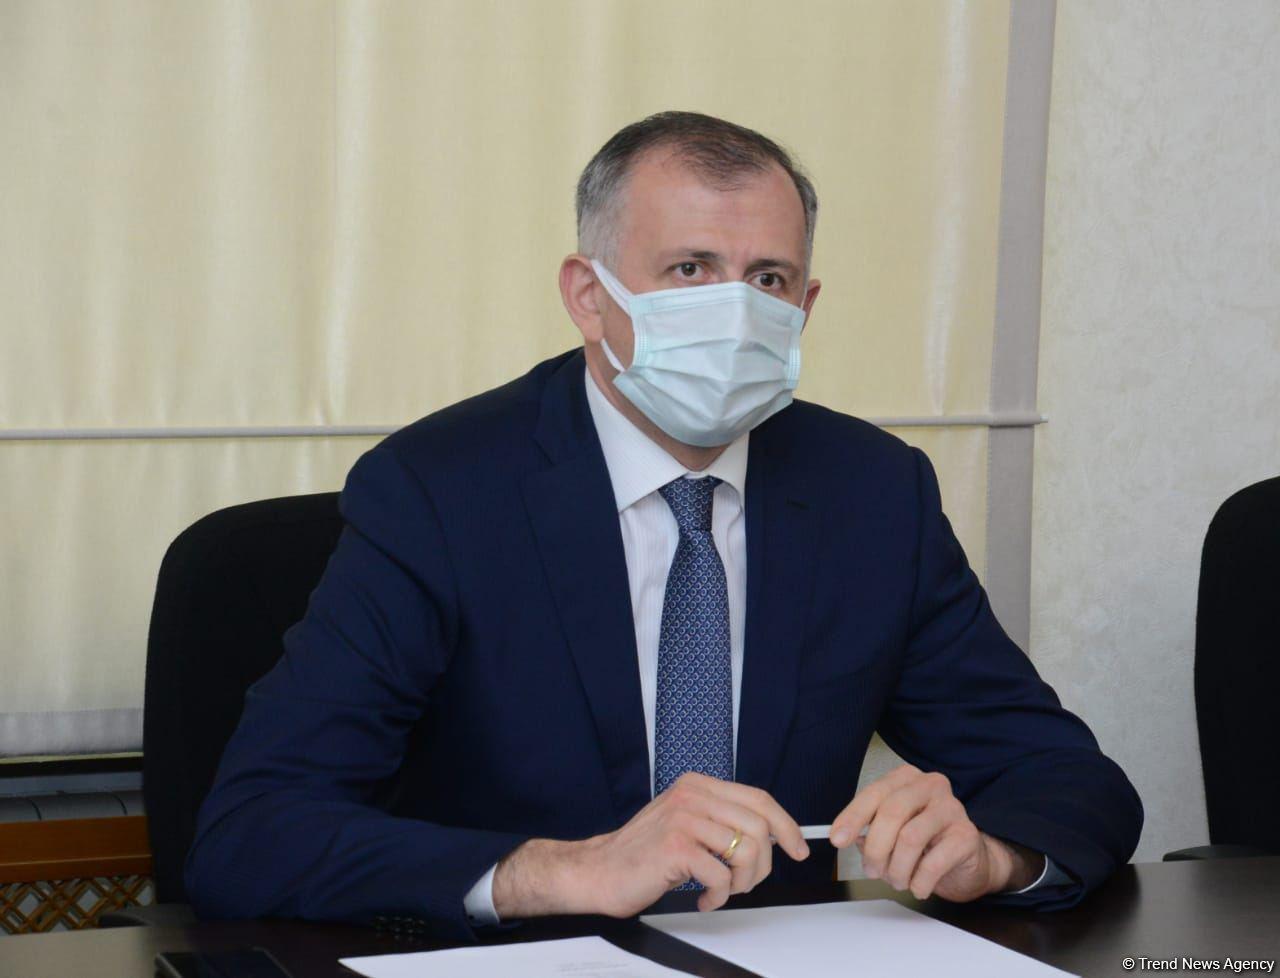 Georgian PM's visit to Azerbaijan to give new impetus to bilateral relations - envoy